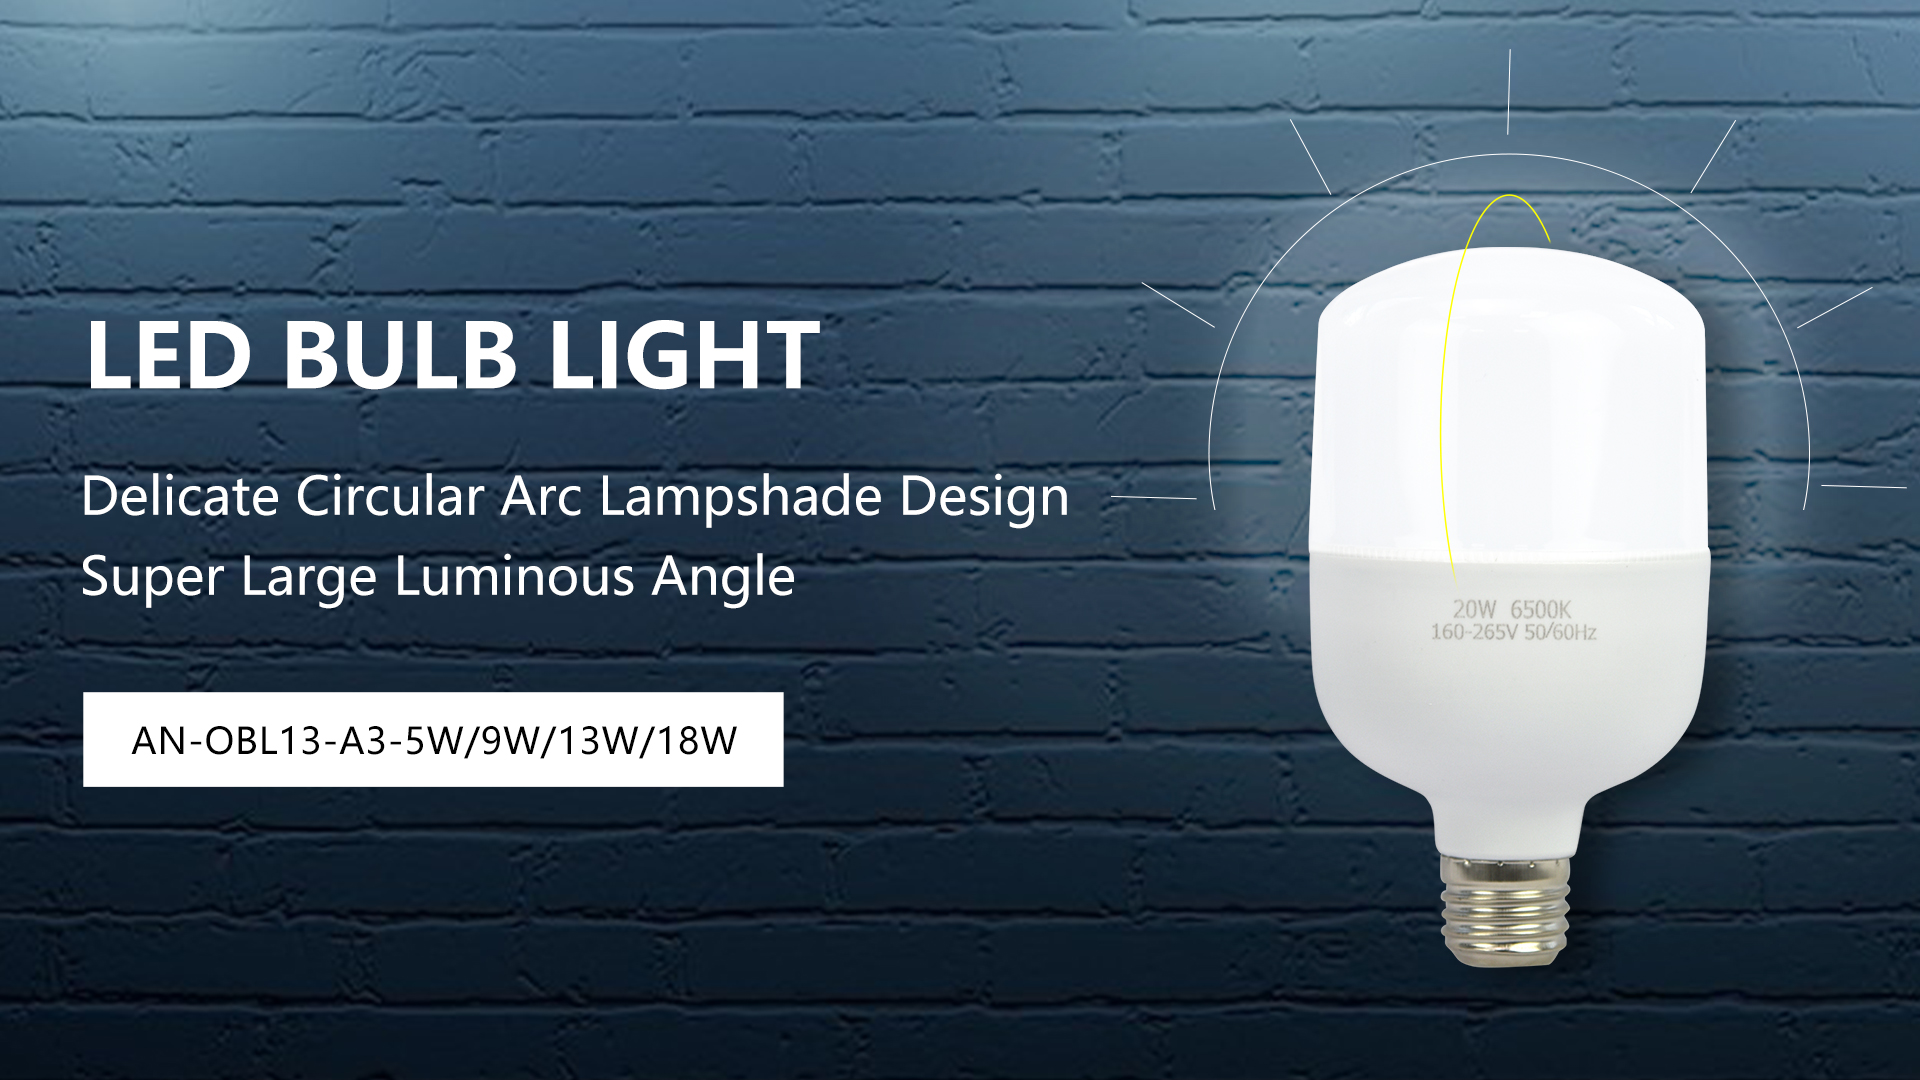 Large beam angle LED bulb Light